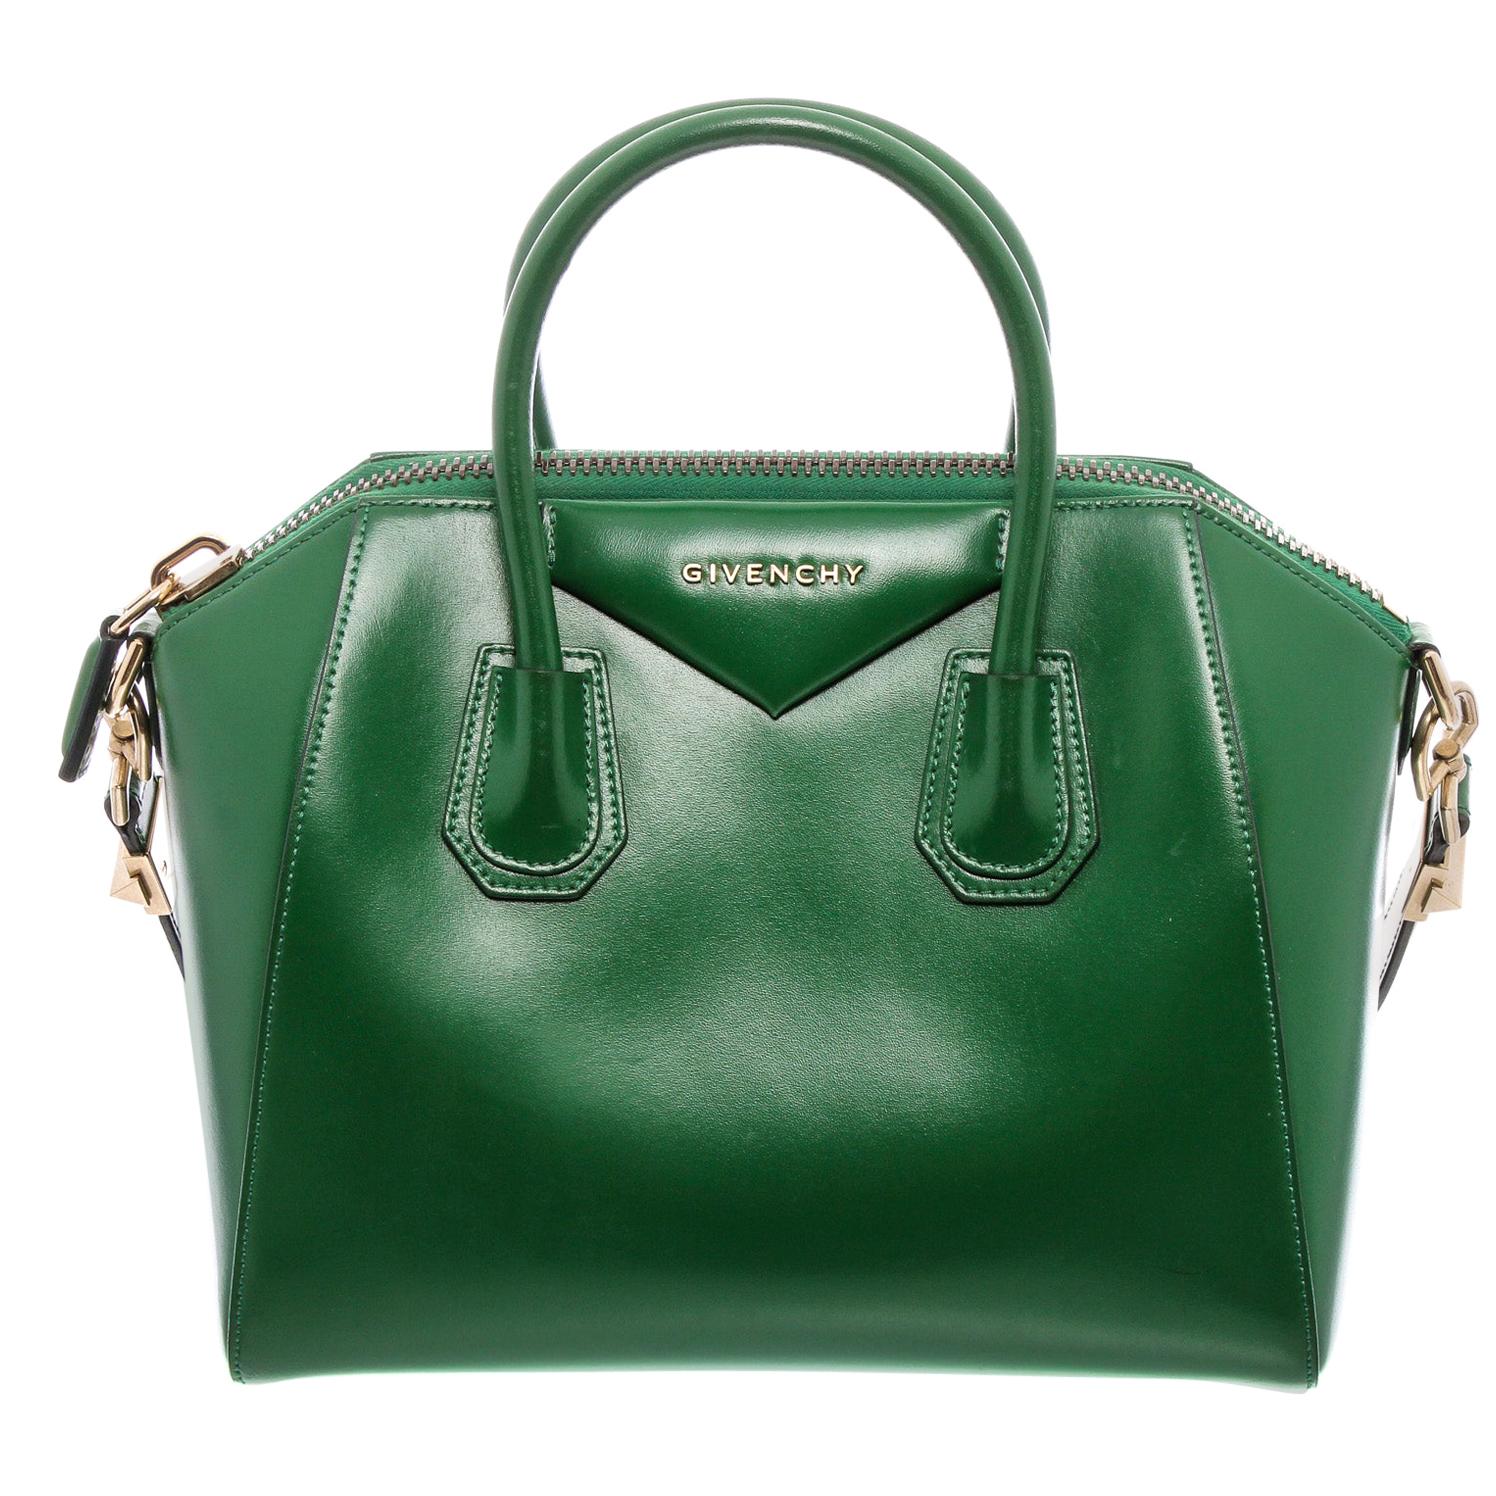 Givenchy Antigona Medium Bag In Dark Green